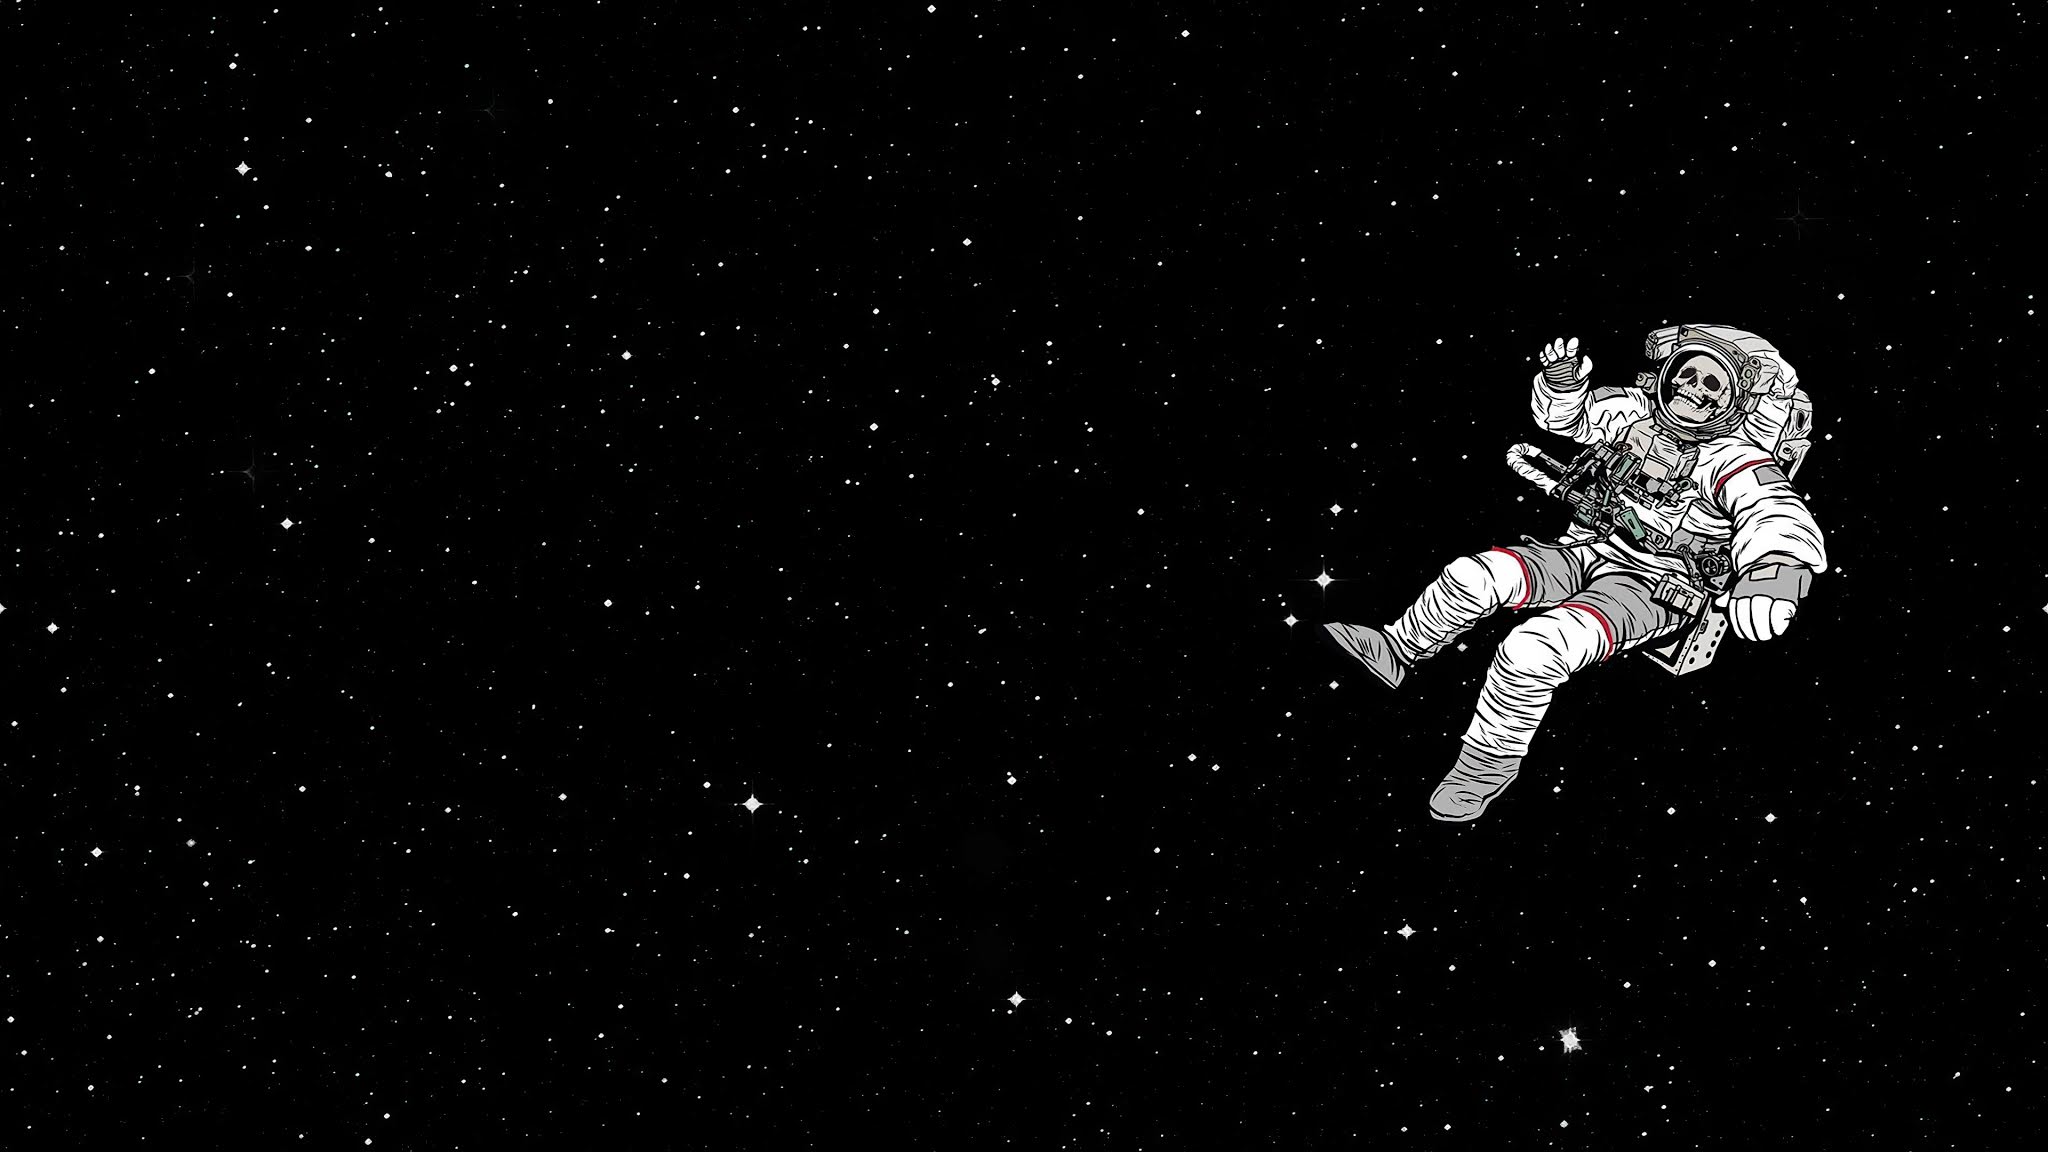 Astronaut Lost in Infinite Space Wallpaper - XFXWallpapers